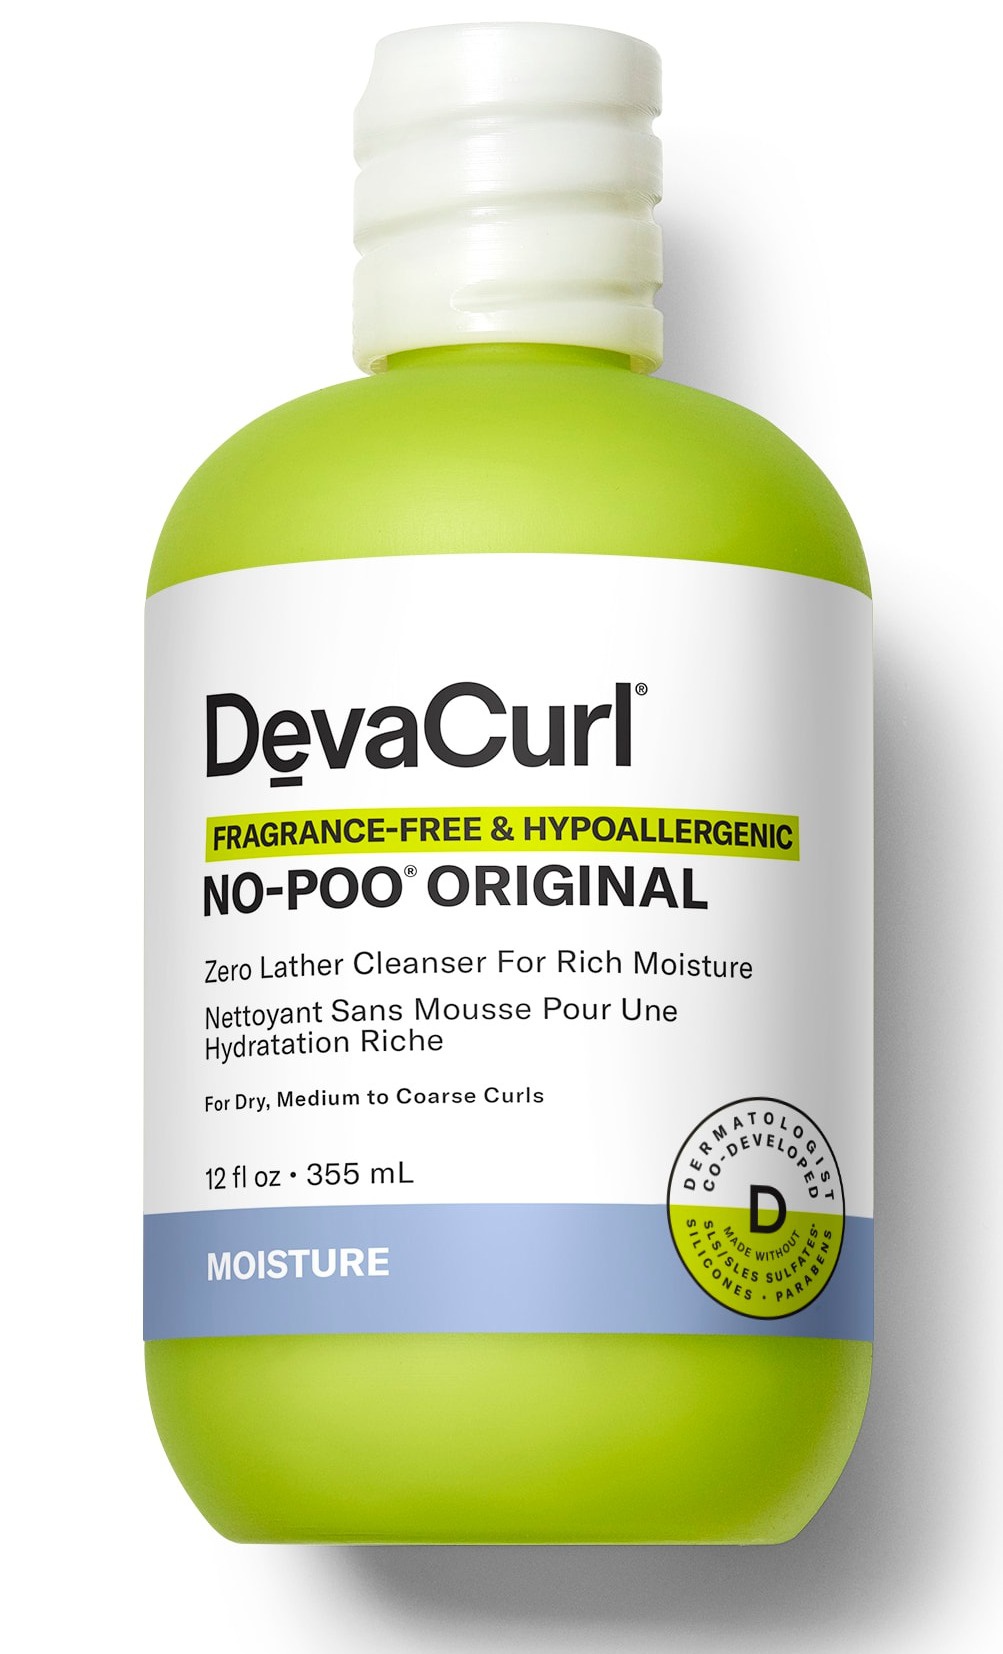 DevaCurl Fragrance-free & Hypoallergenic One Condition Original